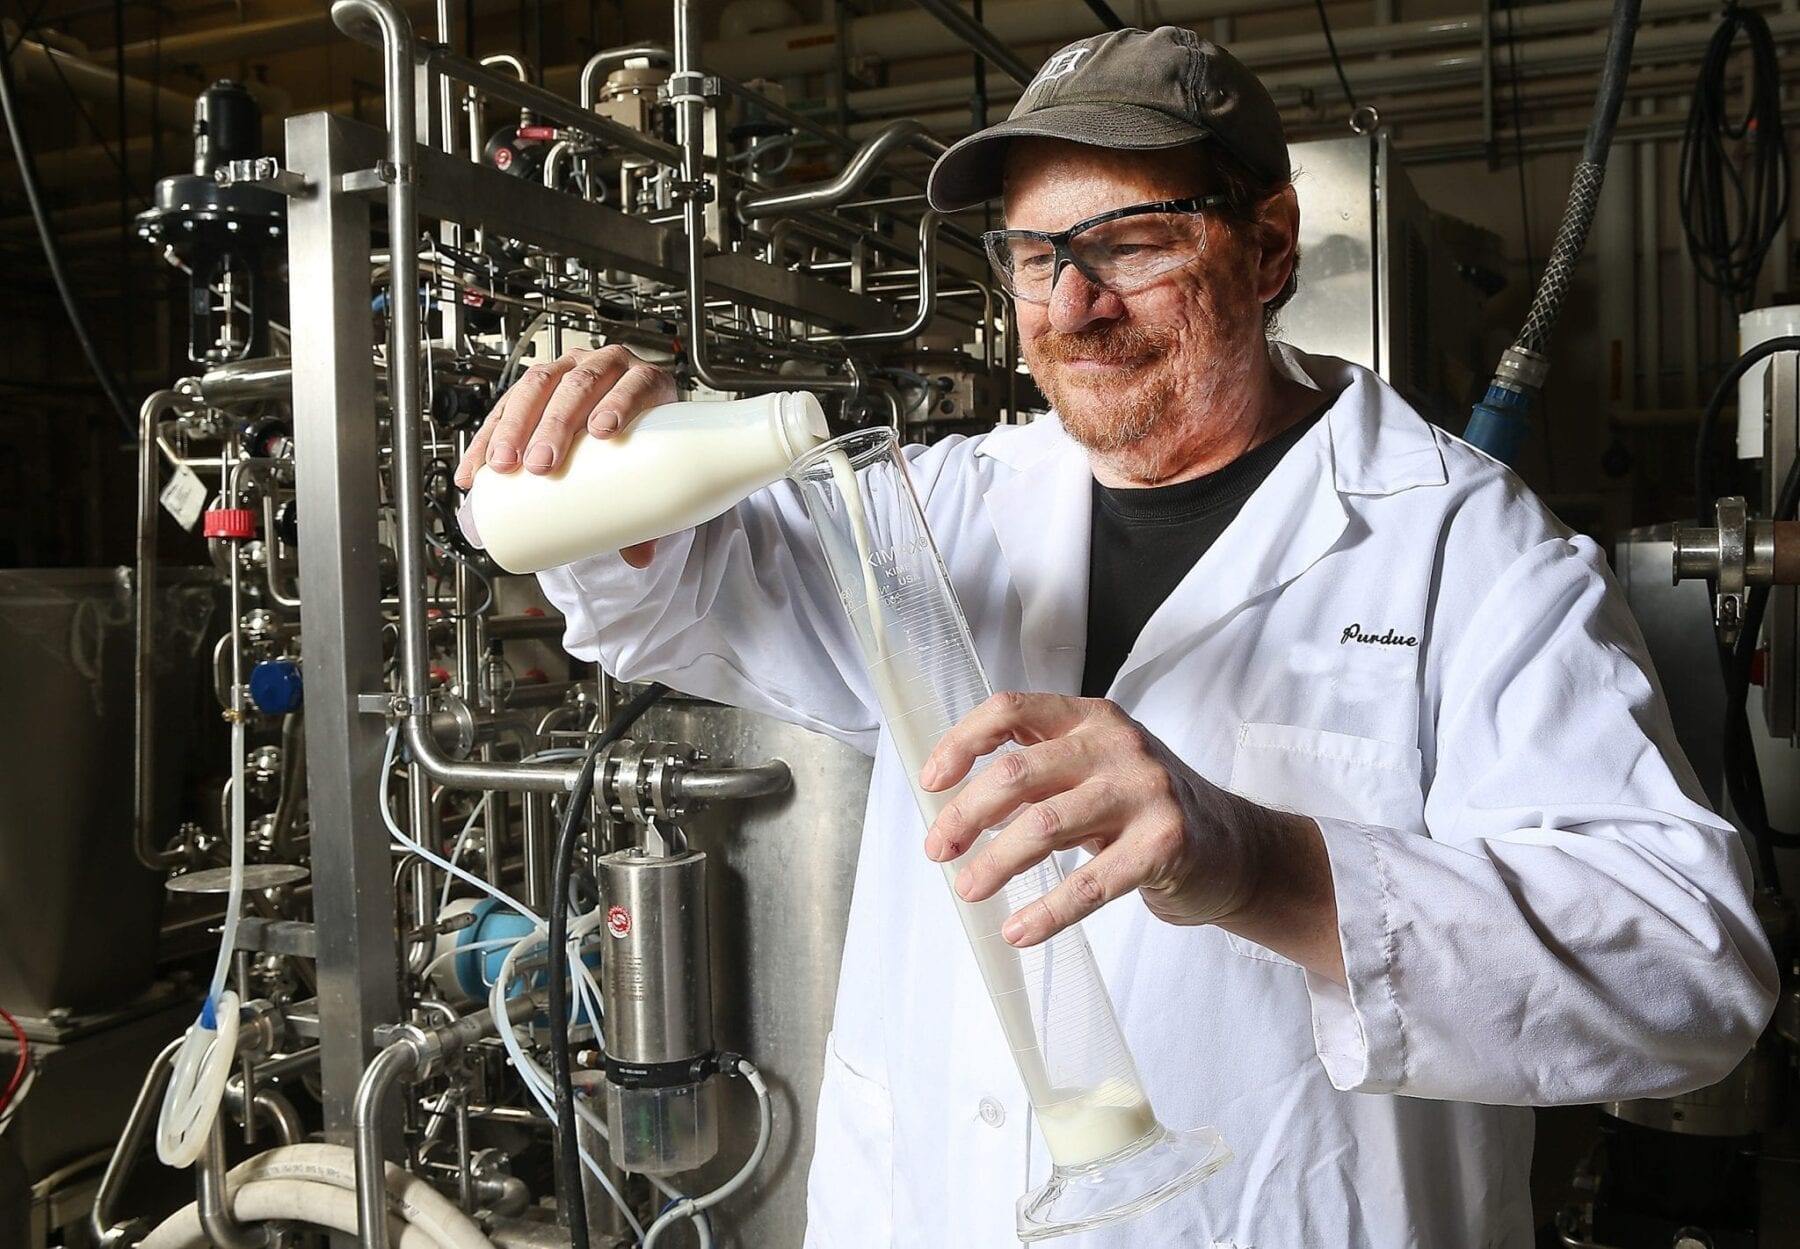 Rapid, low-temperature process adds weeks to milk’s shelf life